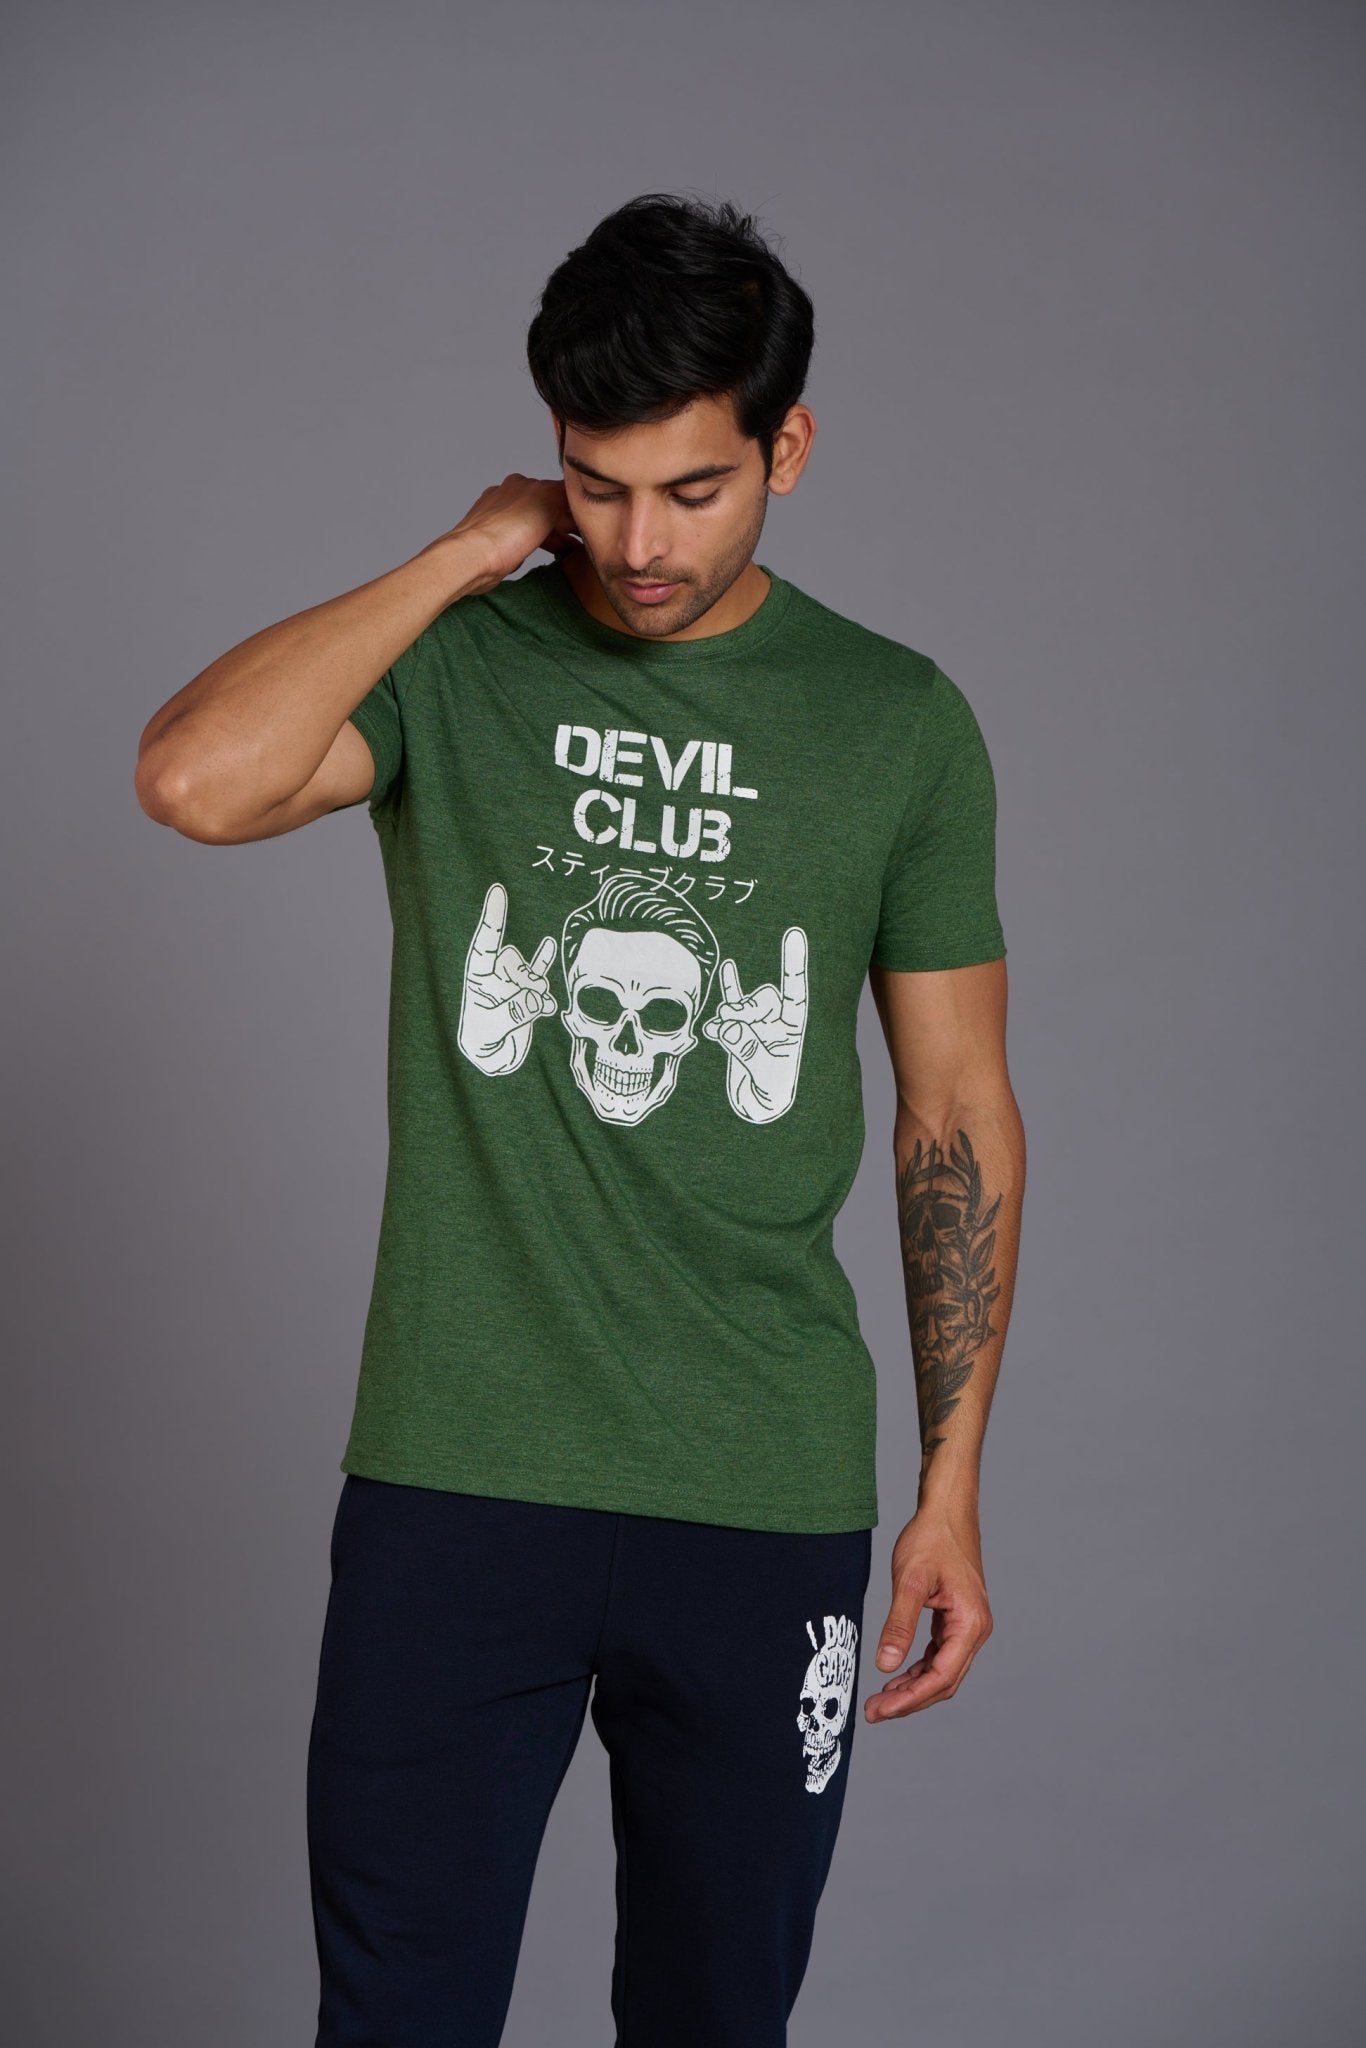 Devil Club Printed Green T-Shirt for Men - Go Devil